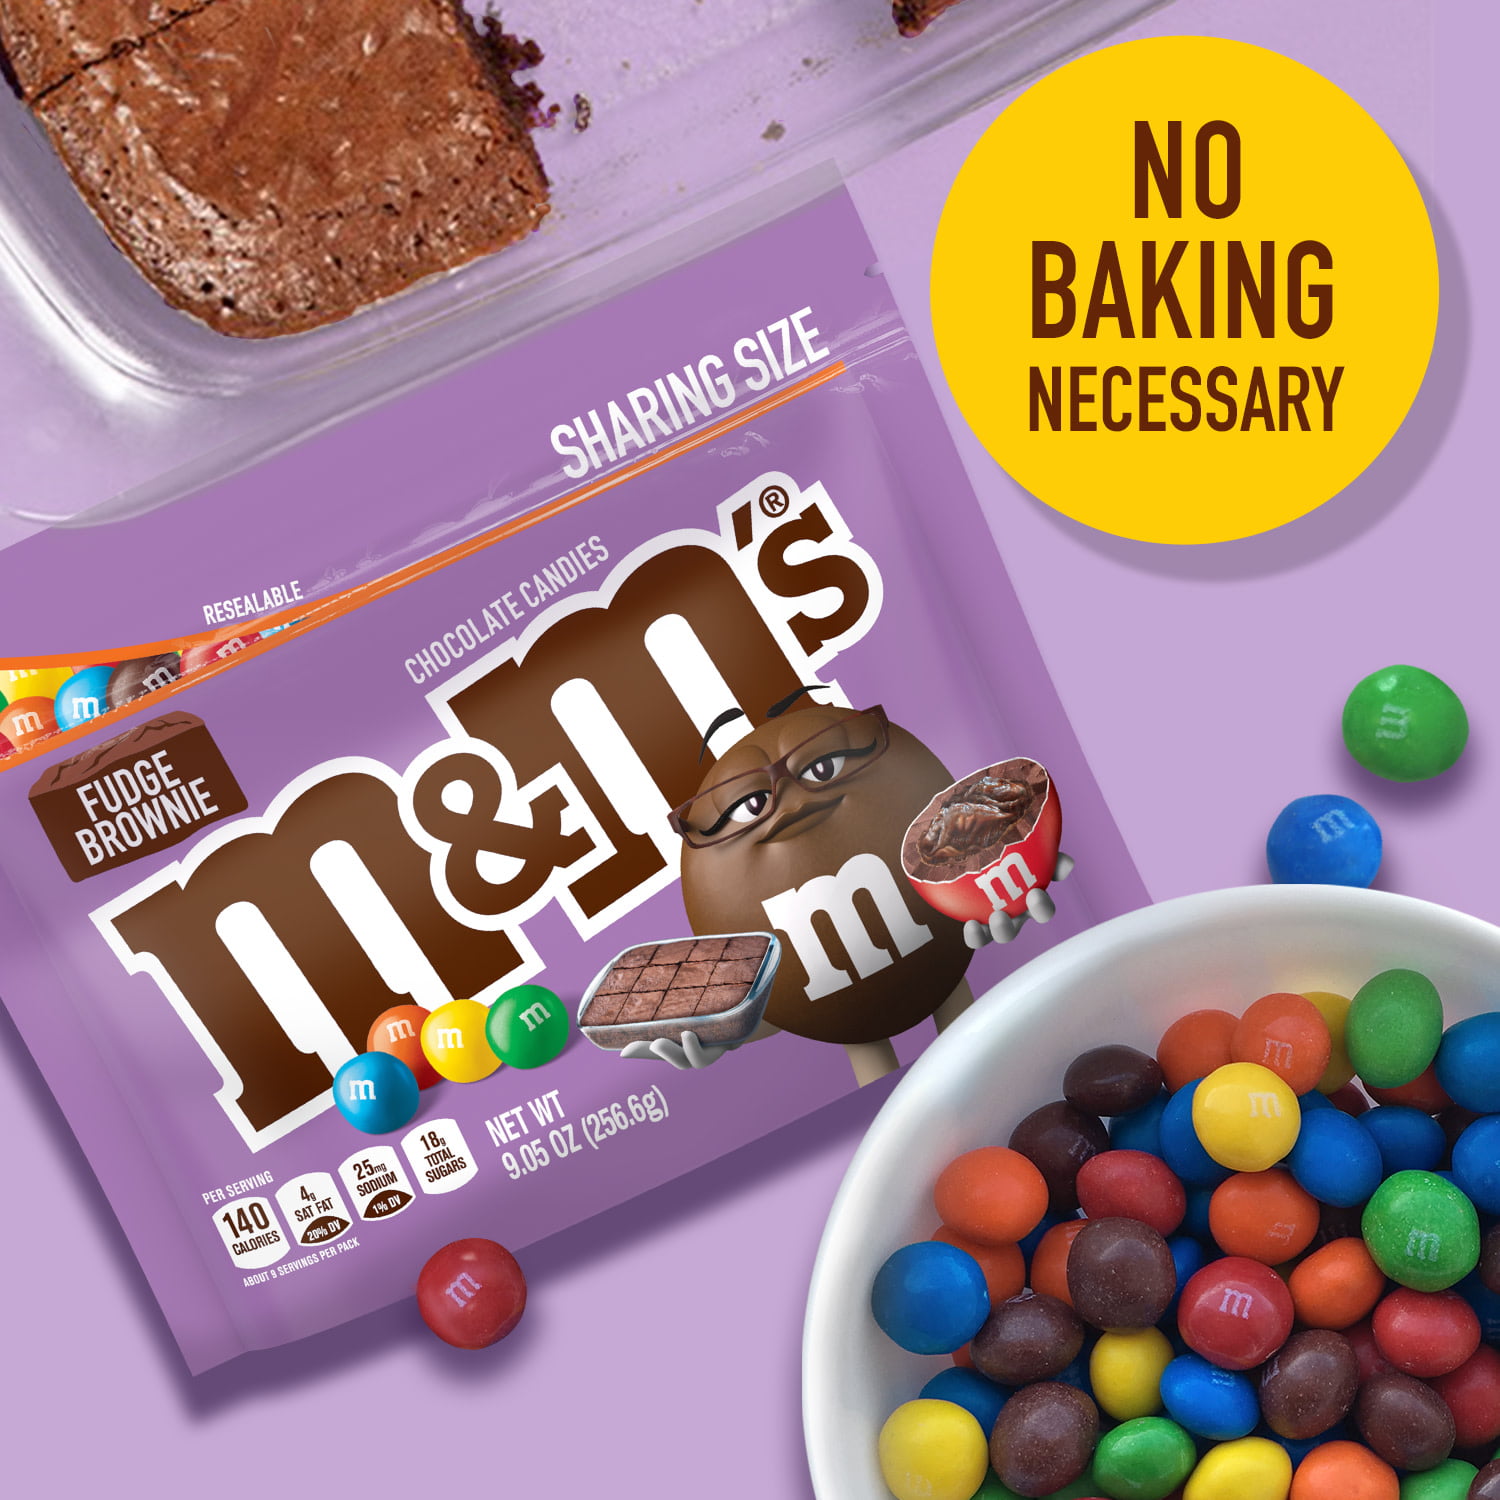 M&M'S Fudge Brownie Chocolate Valentine Candy Bag, 9.5 oz - Fry's